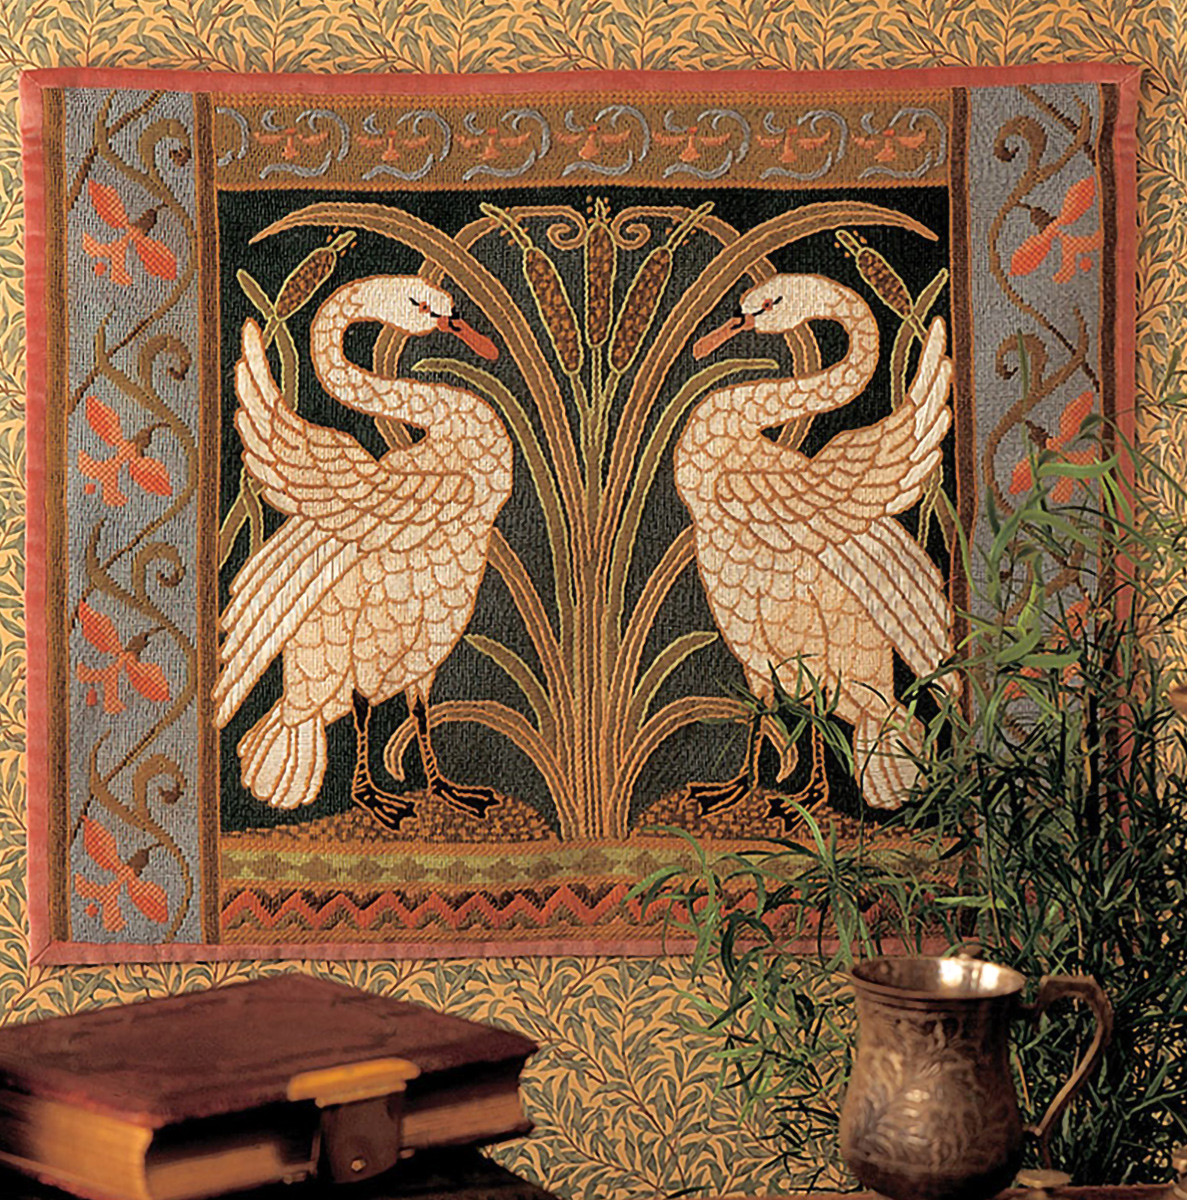 NeedlepointUS: Swans Wall Hanging Kit from Glorafilia, Tapestry Kits, GL4174